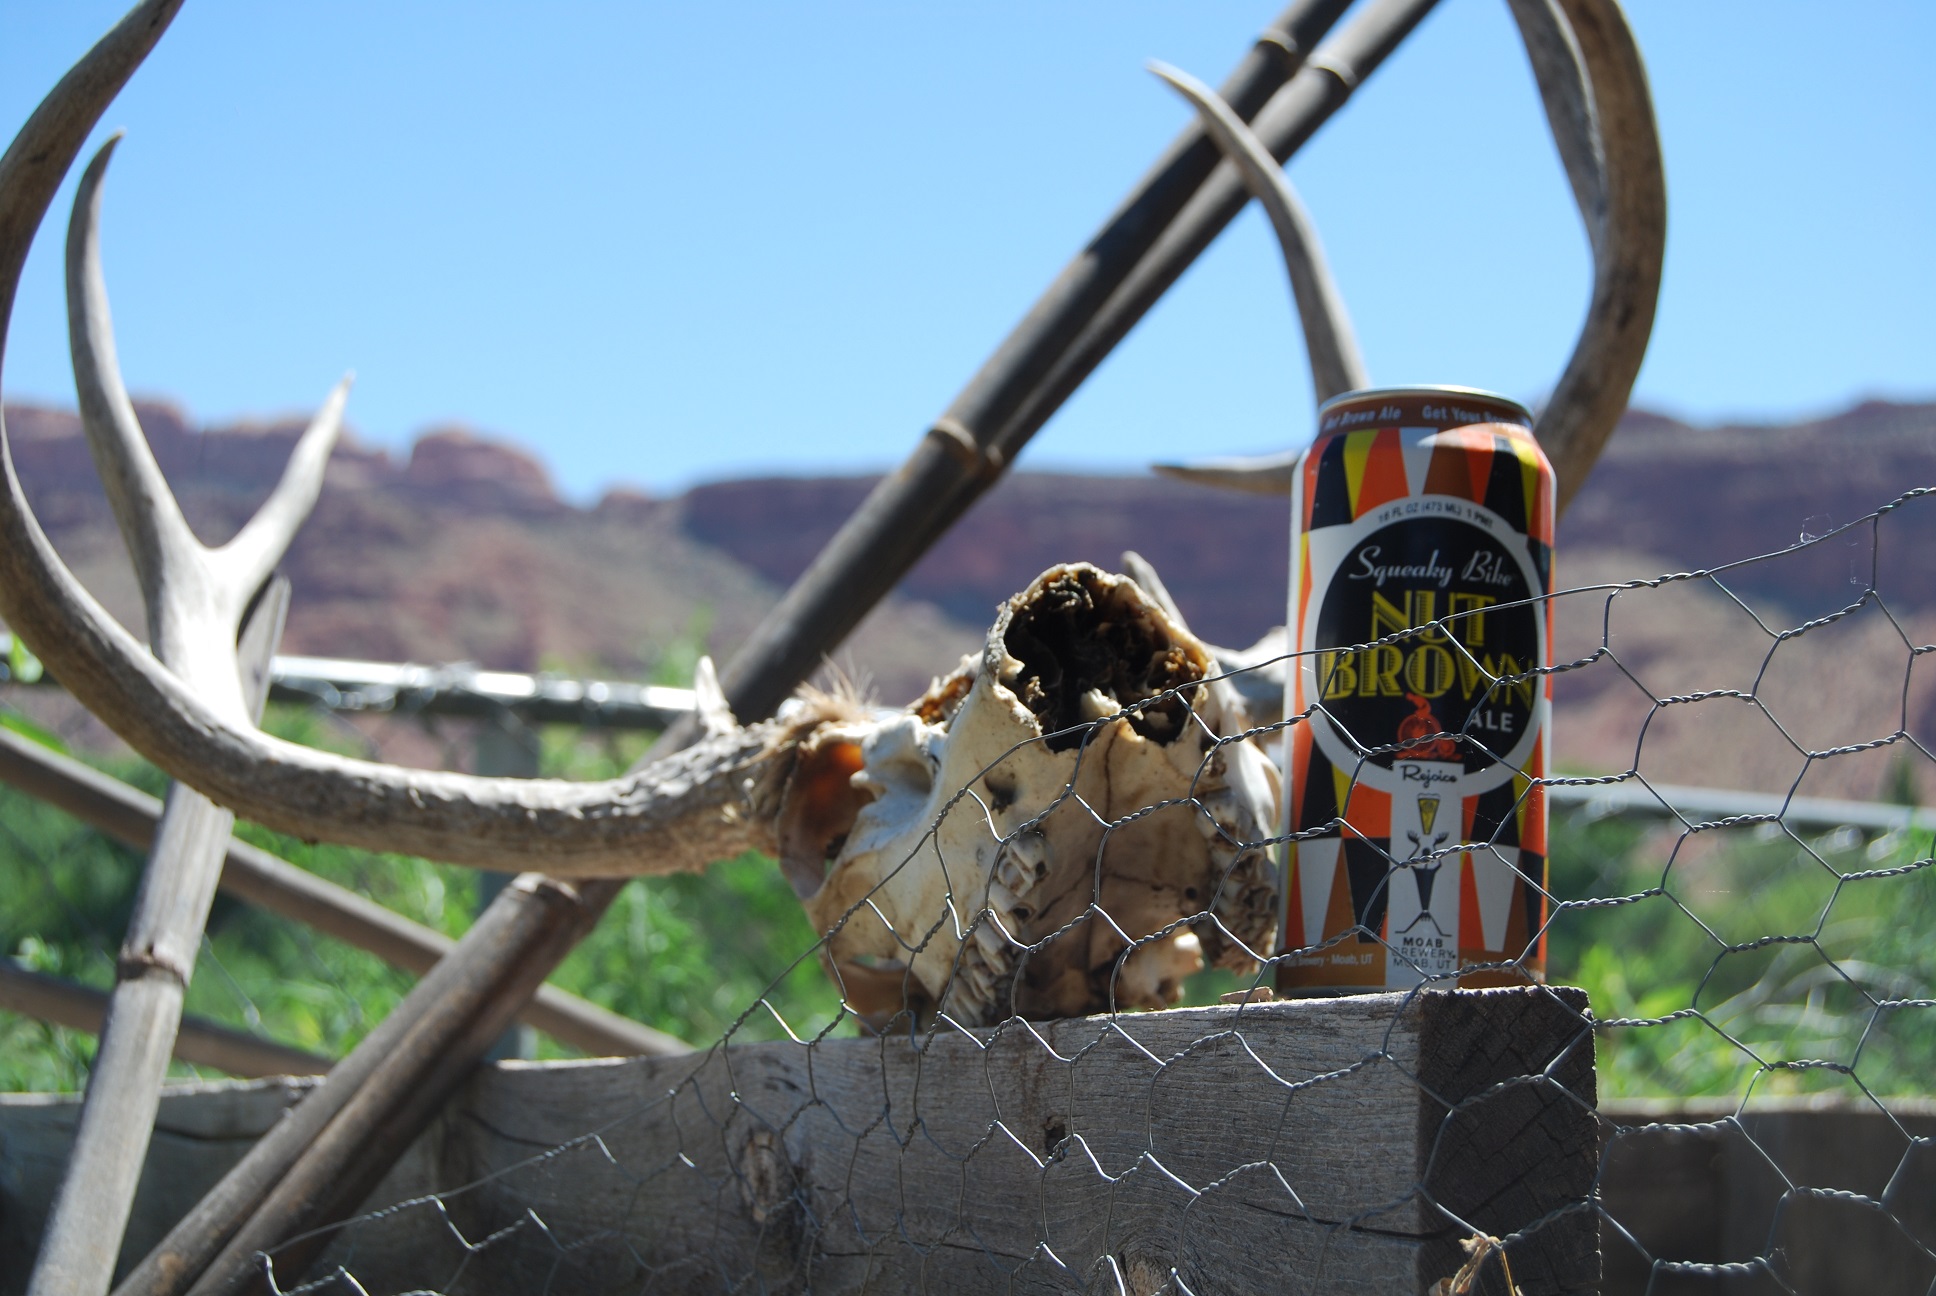 Moab Brewery | Squeaky Bike Nut Brown Ale